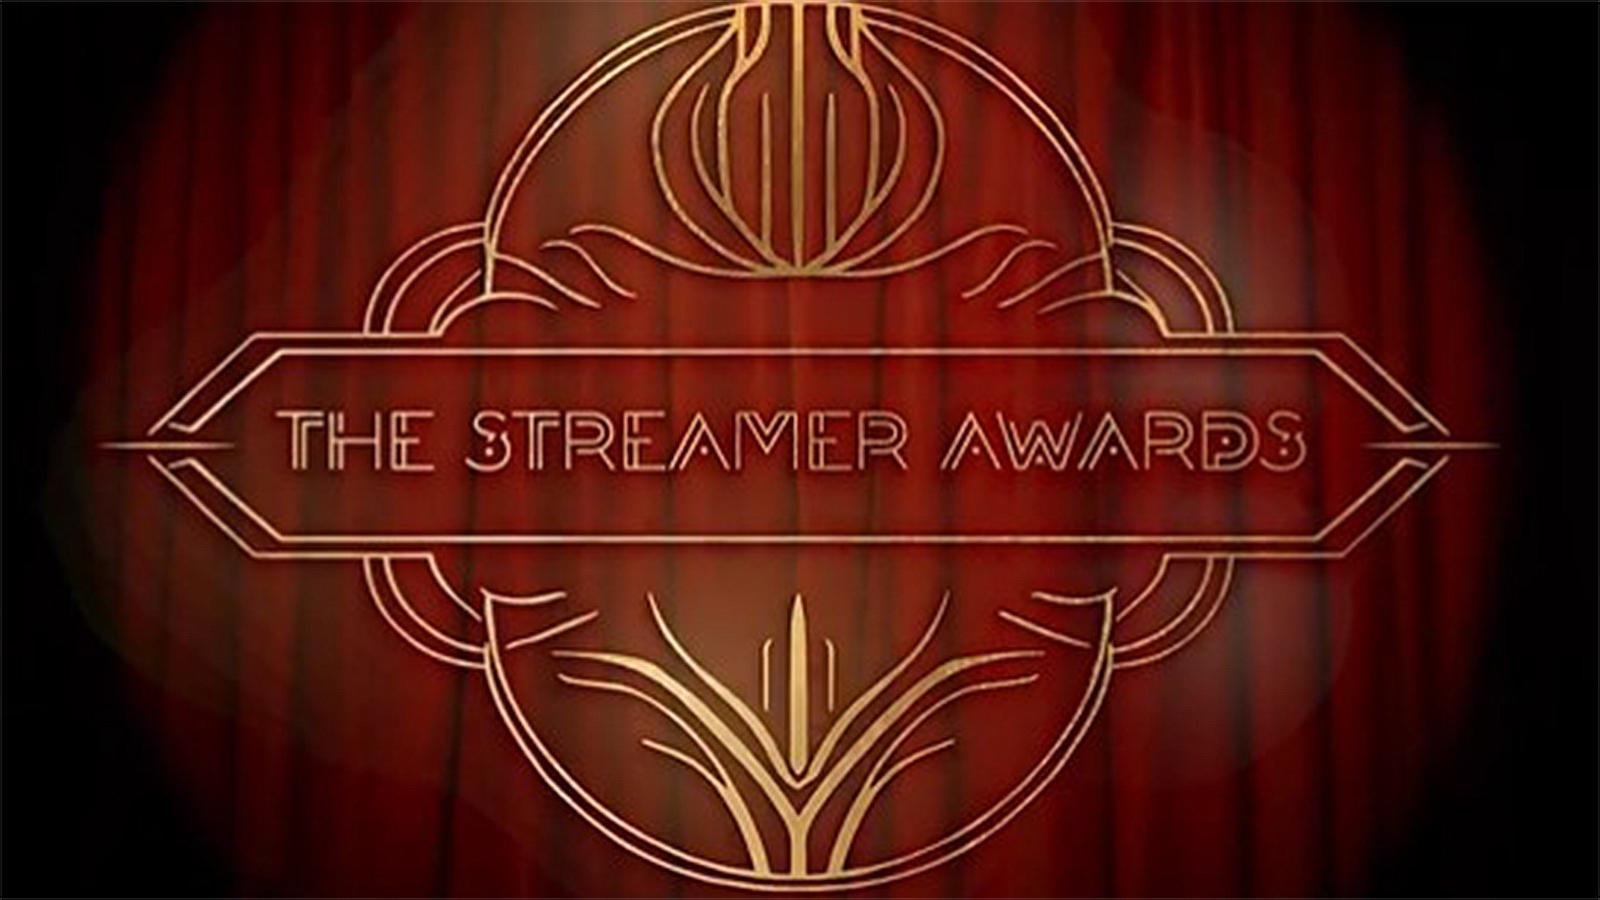 Streamer Awards 2023 winners, Twitch Streamer Awards 2023 Winners - News